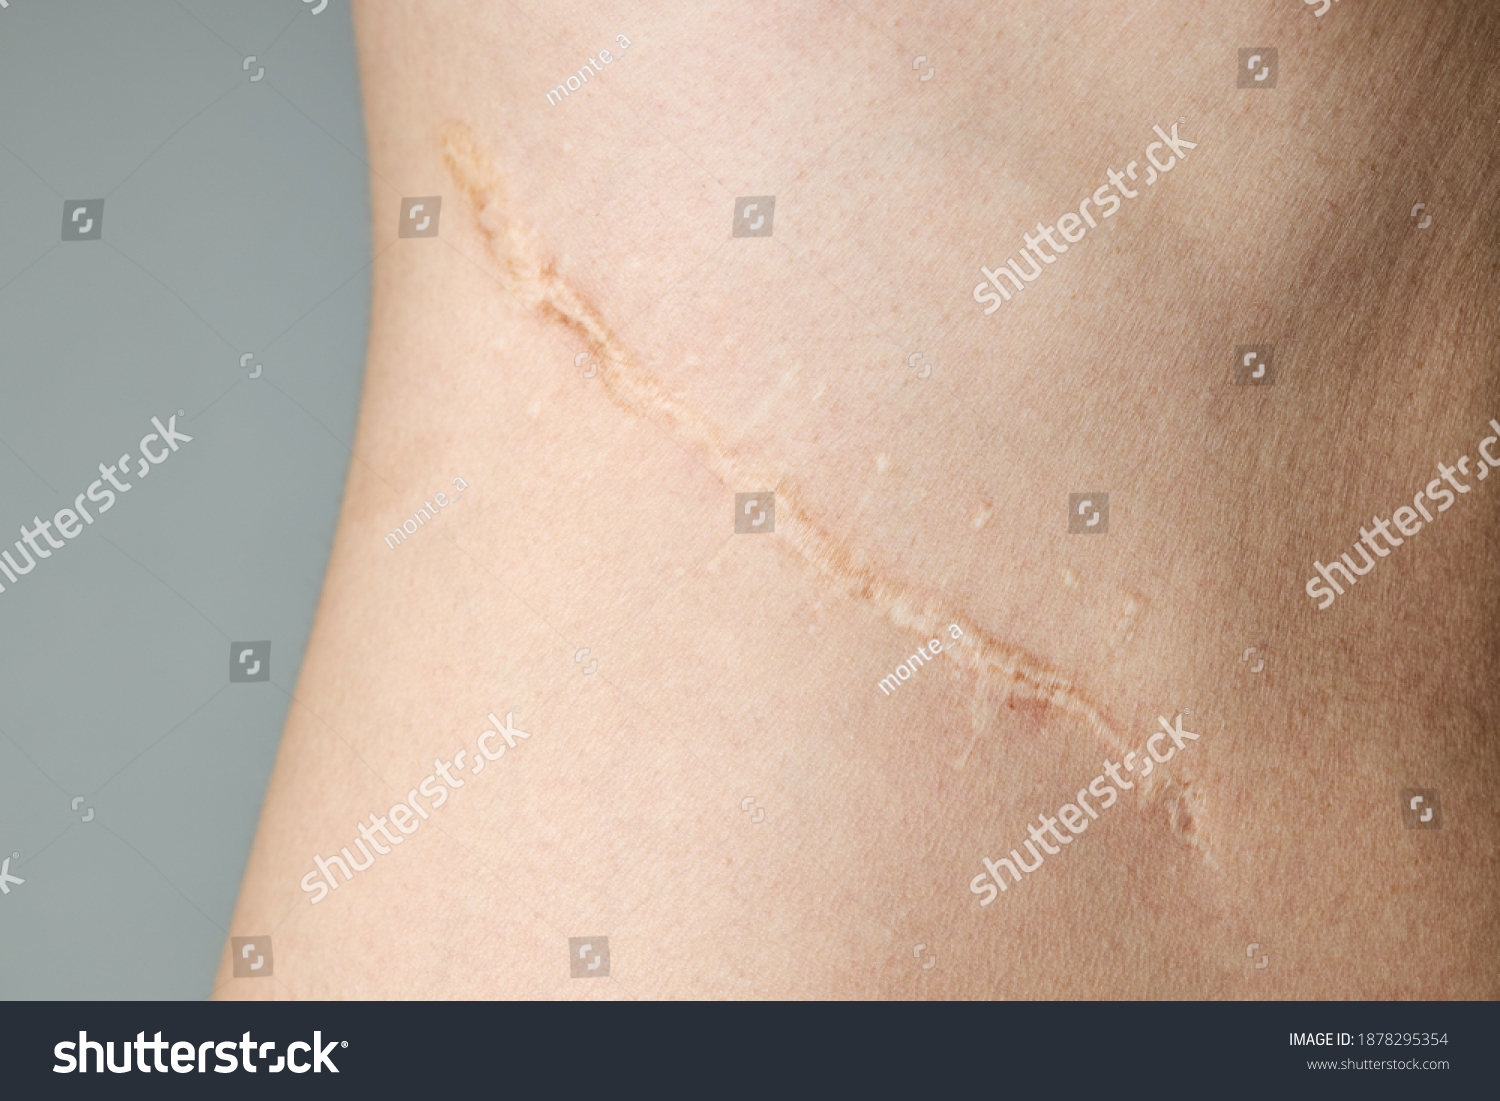 surgery scar after kidney pyelonephritis.  #1878295354